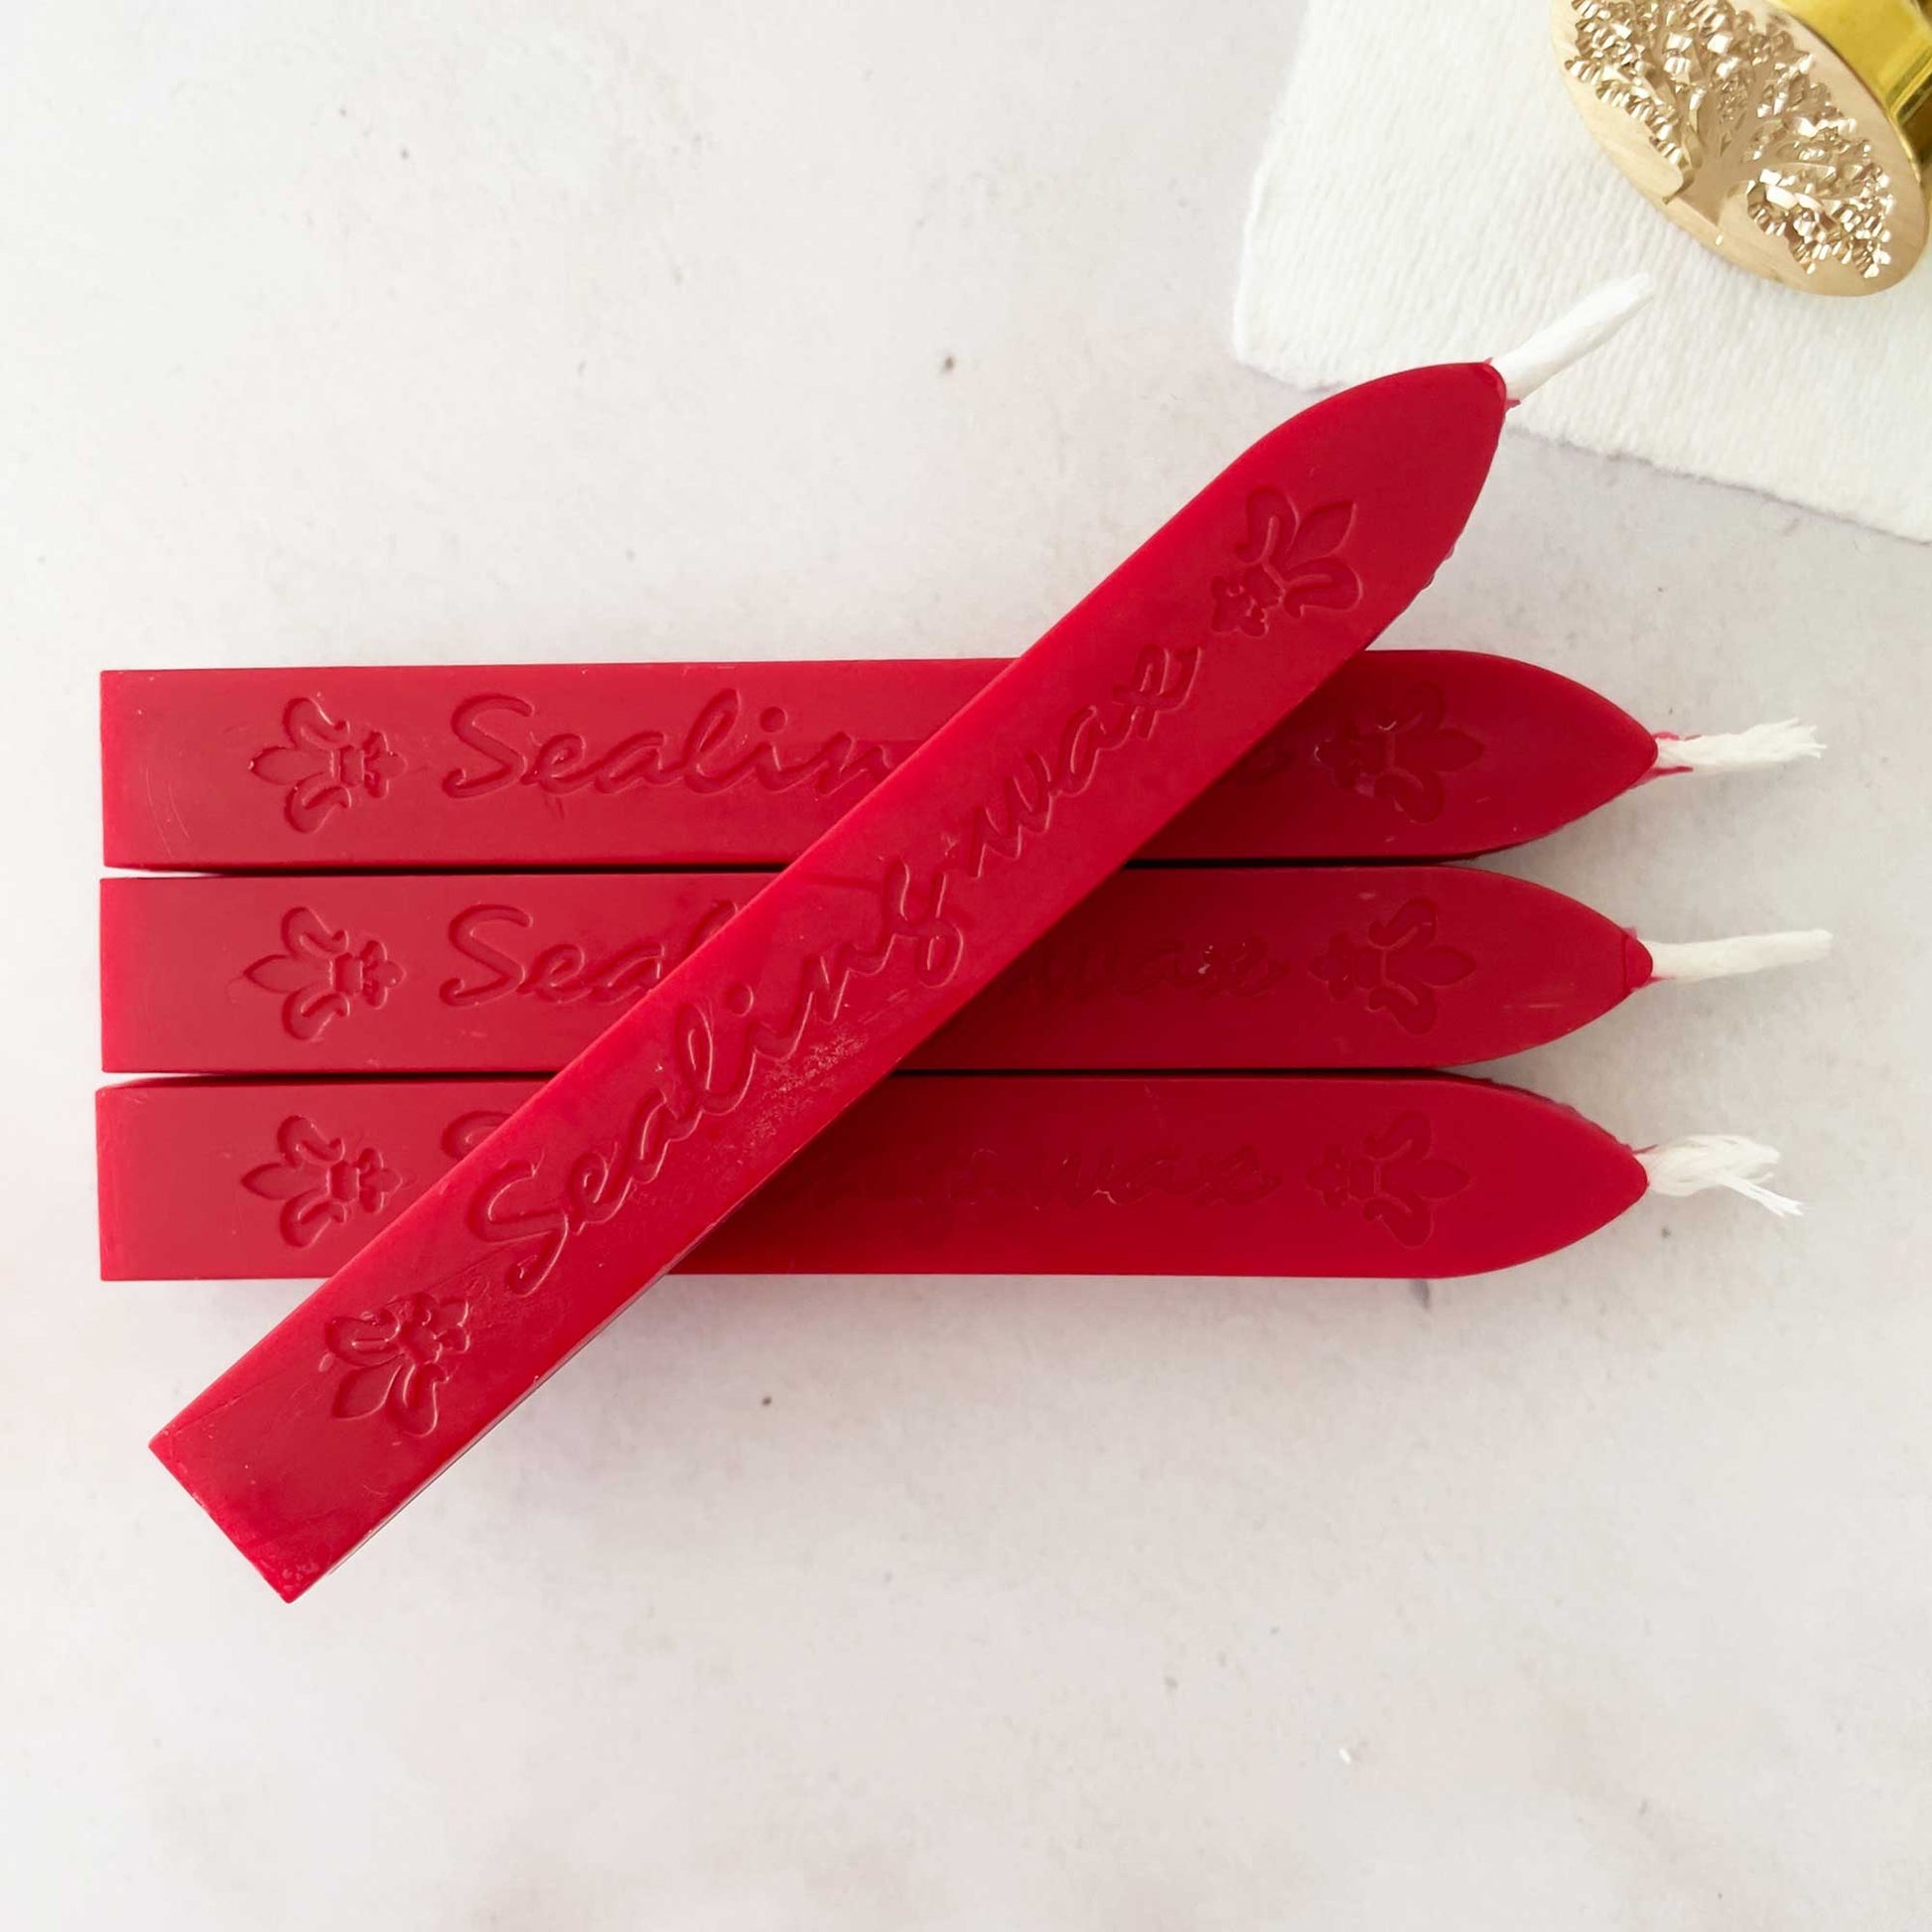 Ferris Red Sprue Wax Sticks 2 oz Package - 1/4 inch | Esslinger 21.433